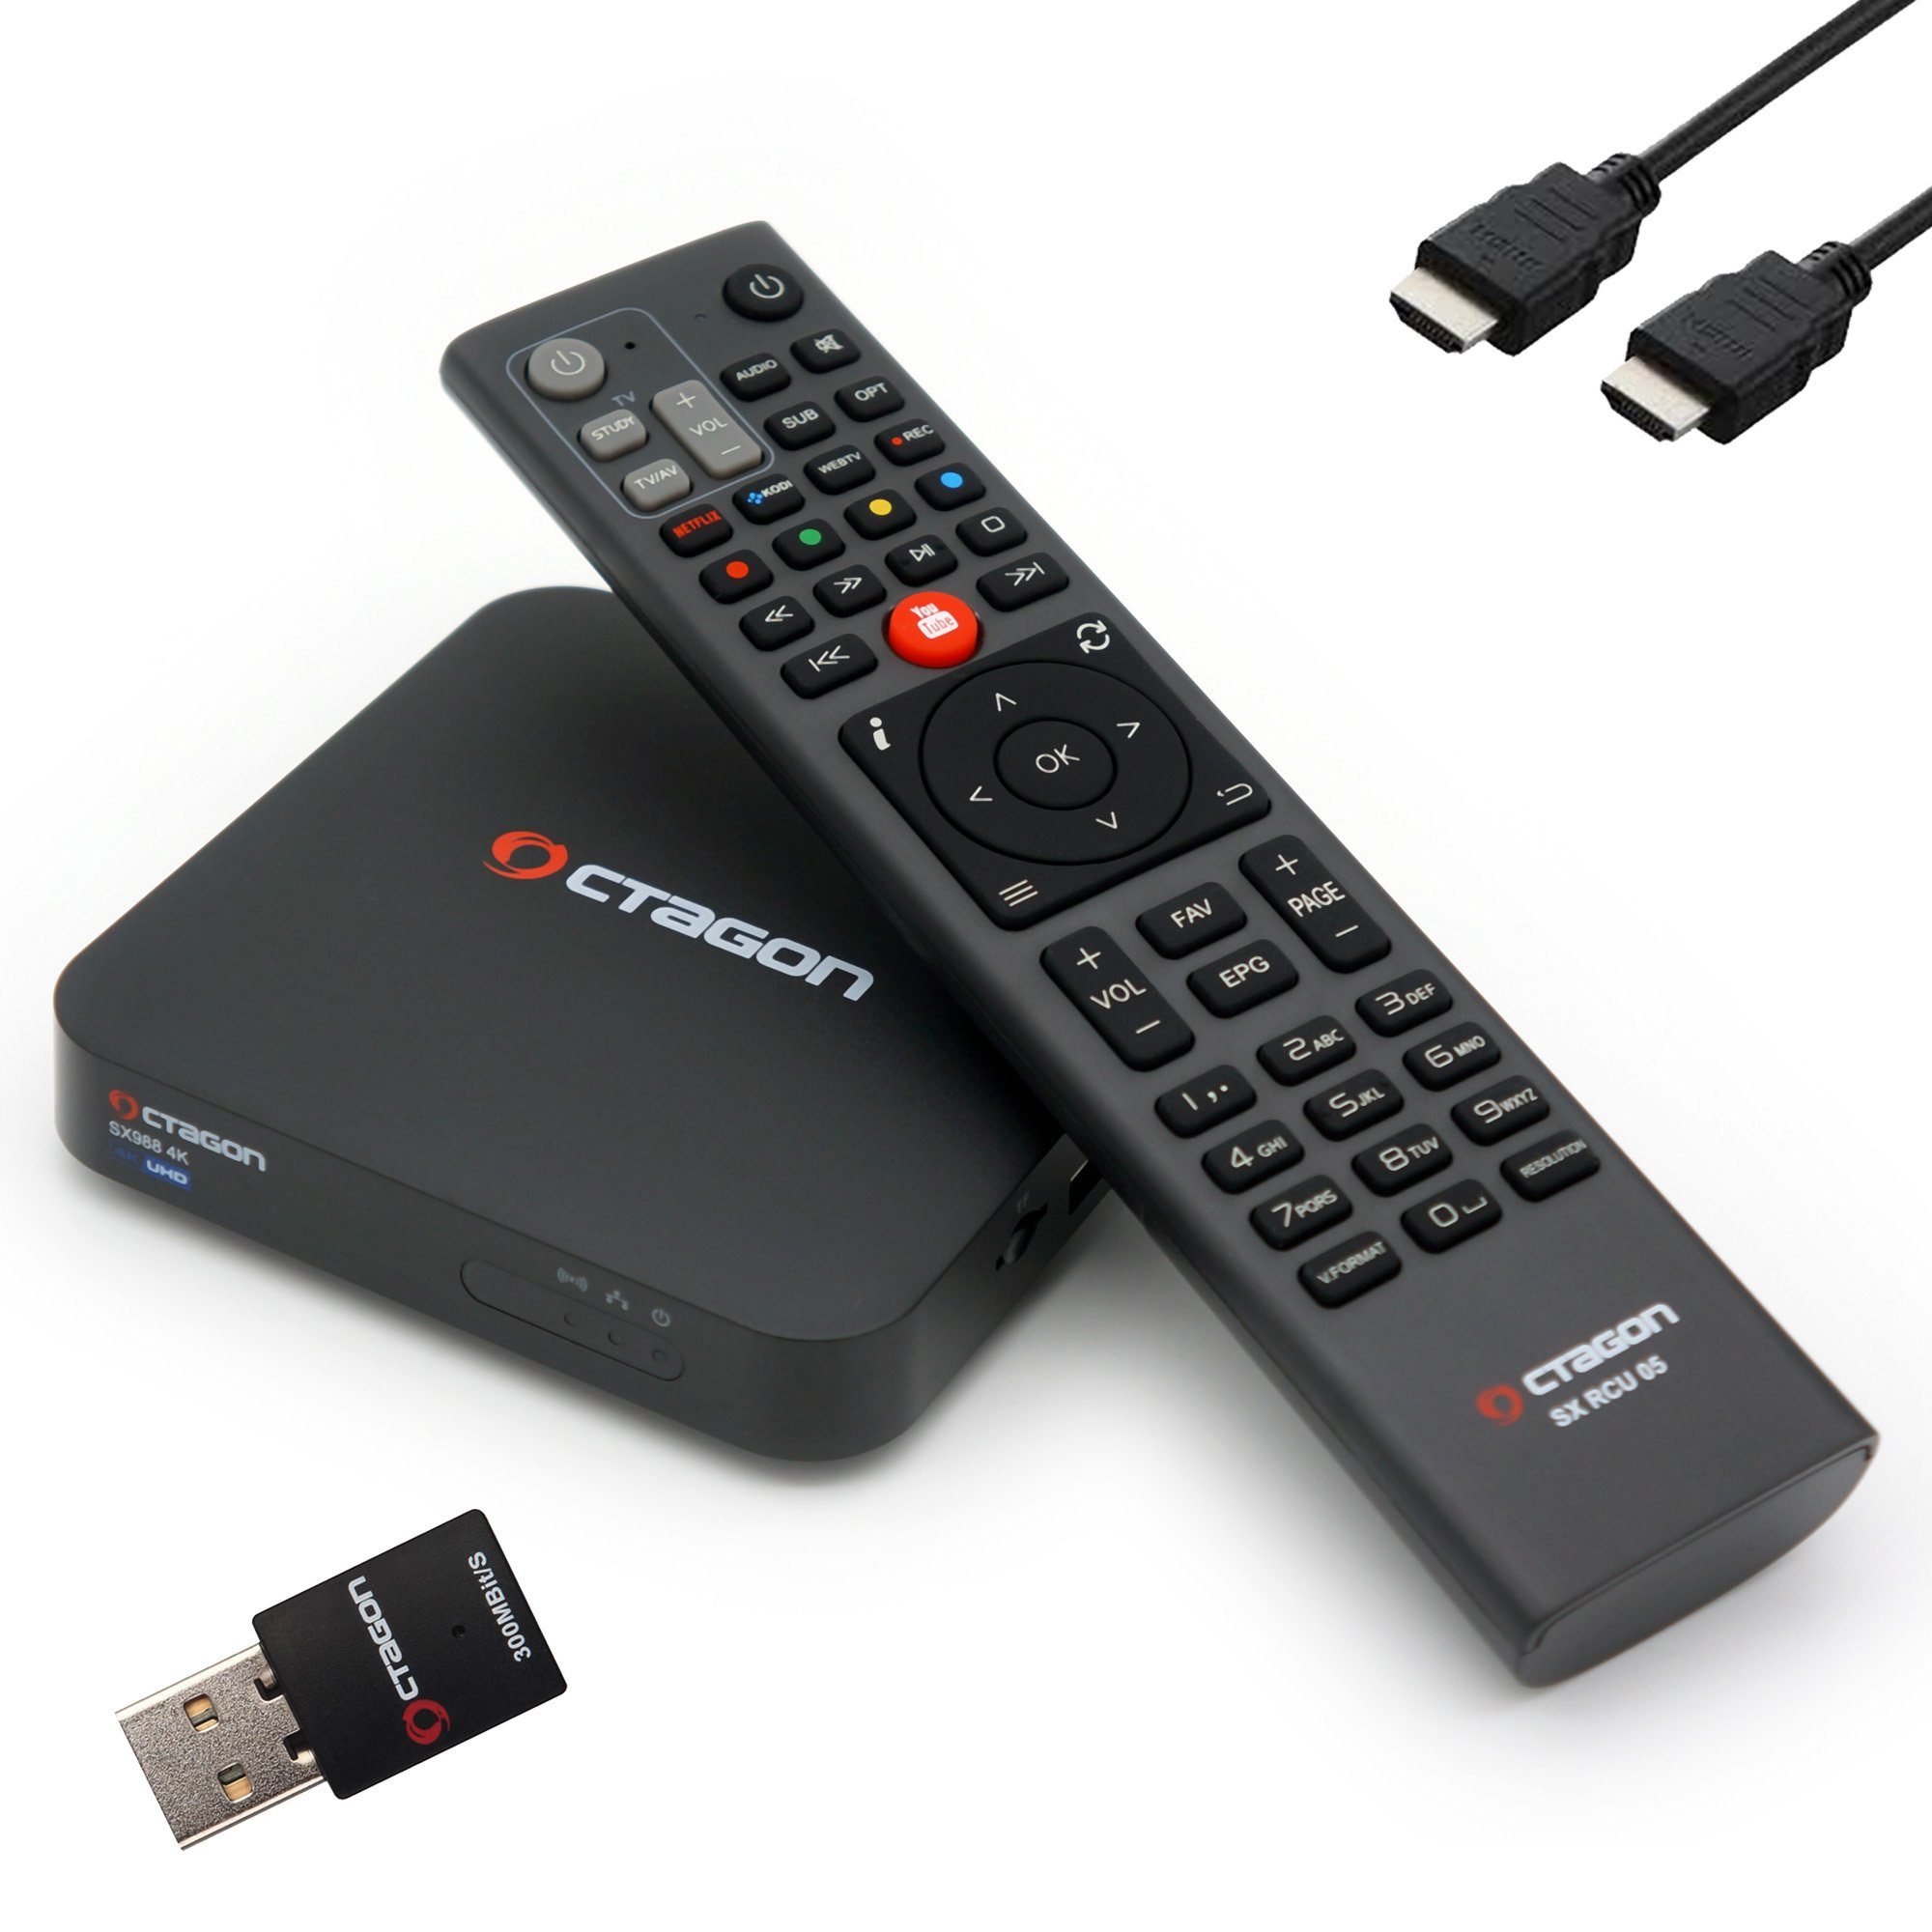 IPTV Streaming-Box H.265 TV + Smart IP HEVC Set-Top Mbit/s UHD SX988 300 Box OCTAGON 4K